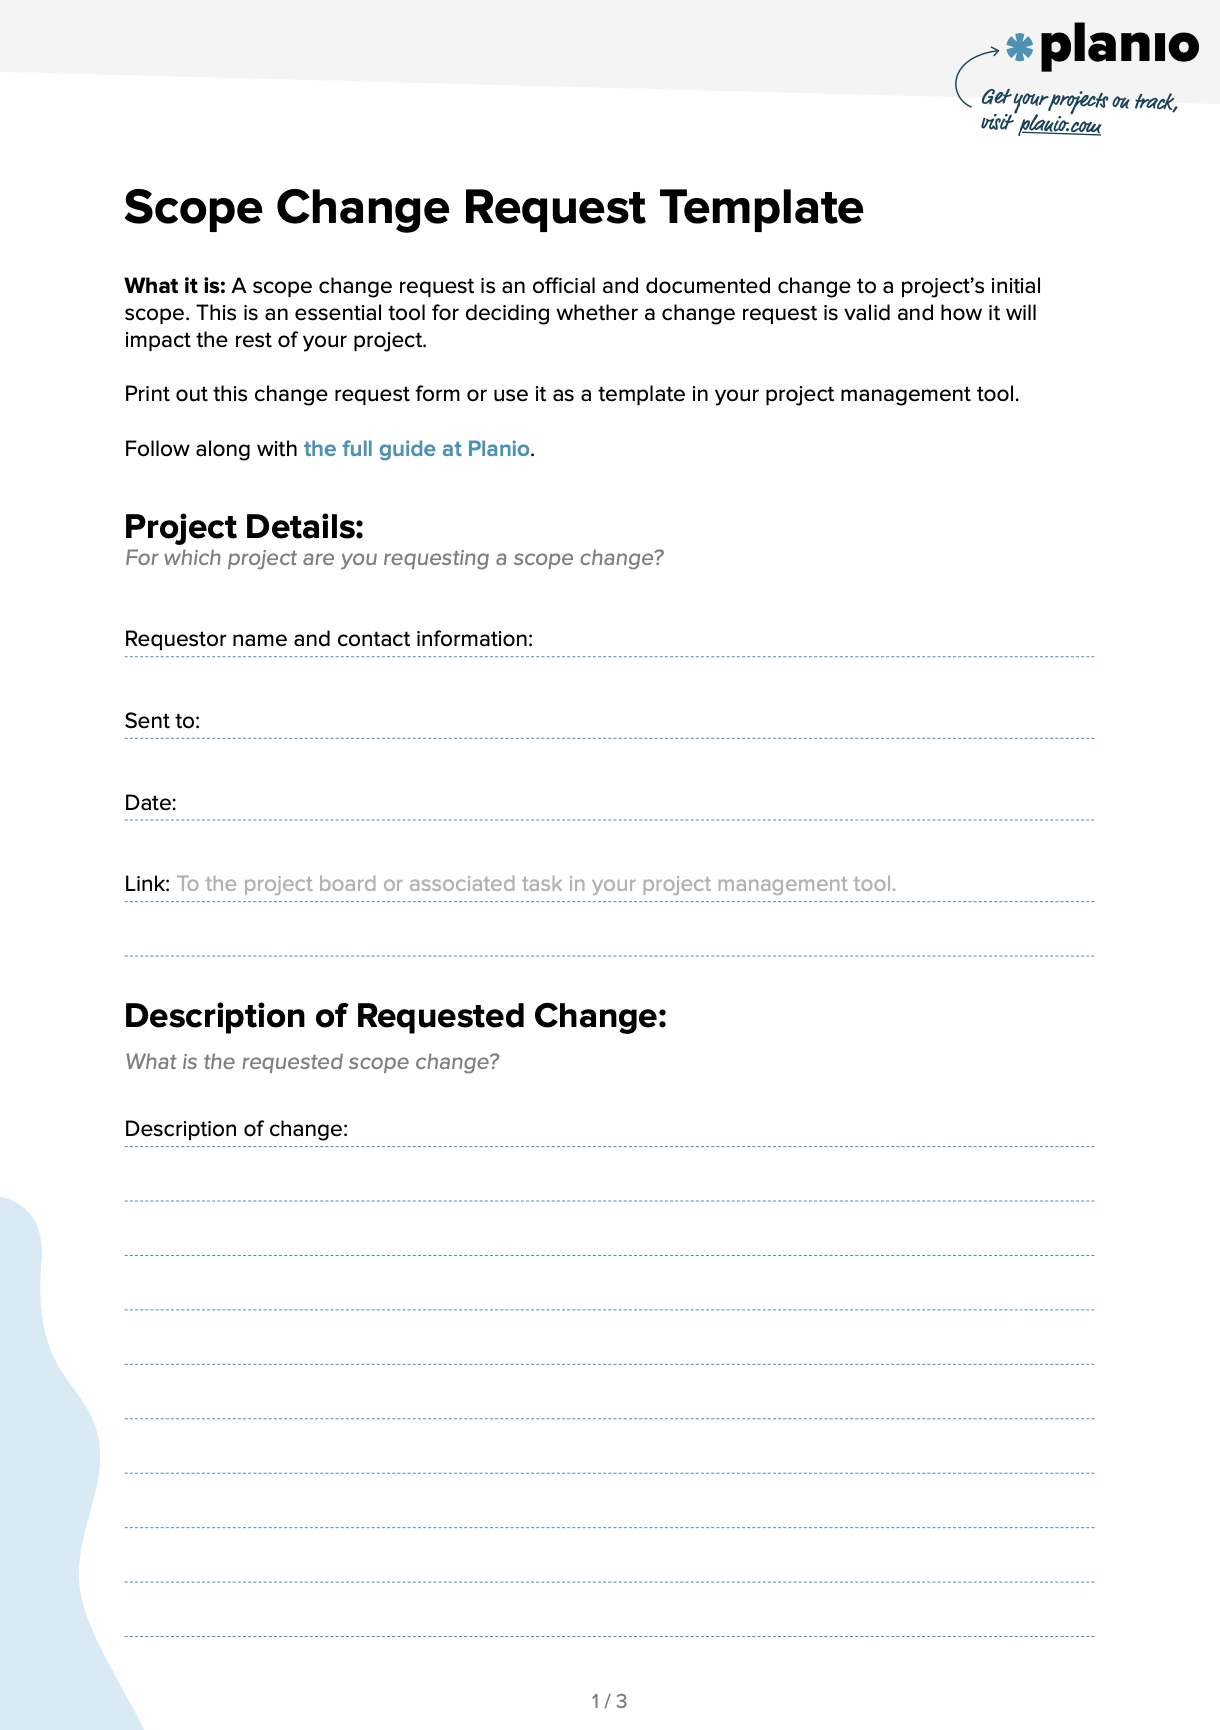 Scope change request template screenshot